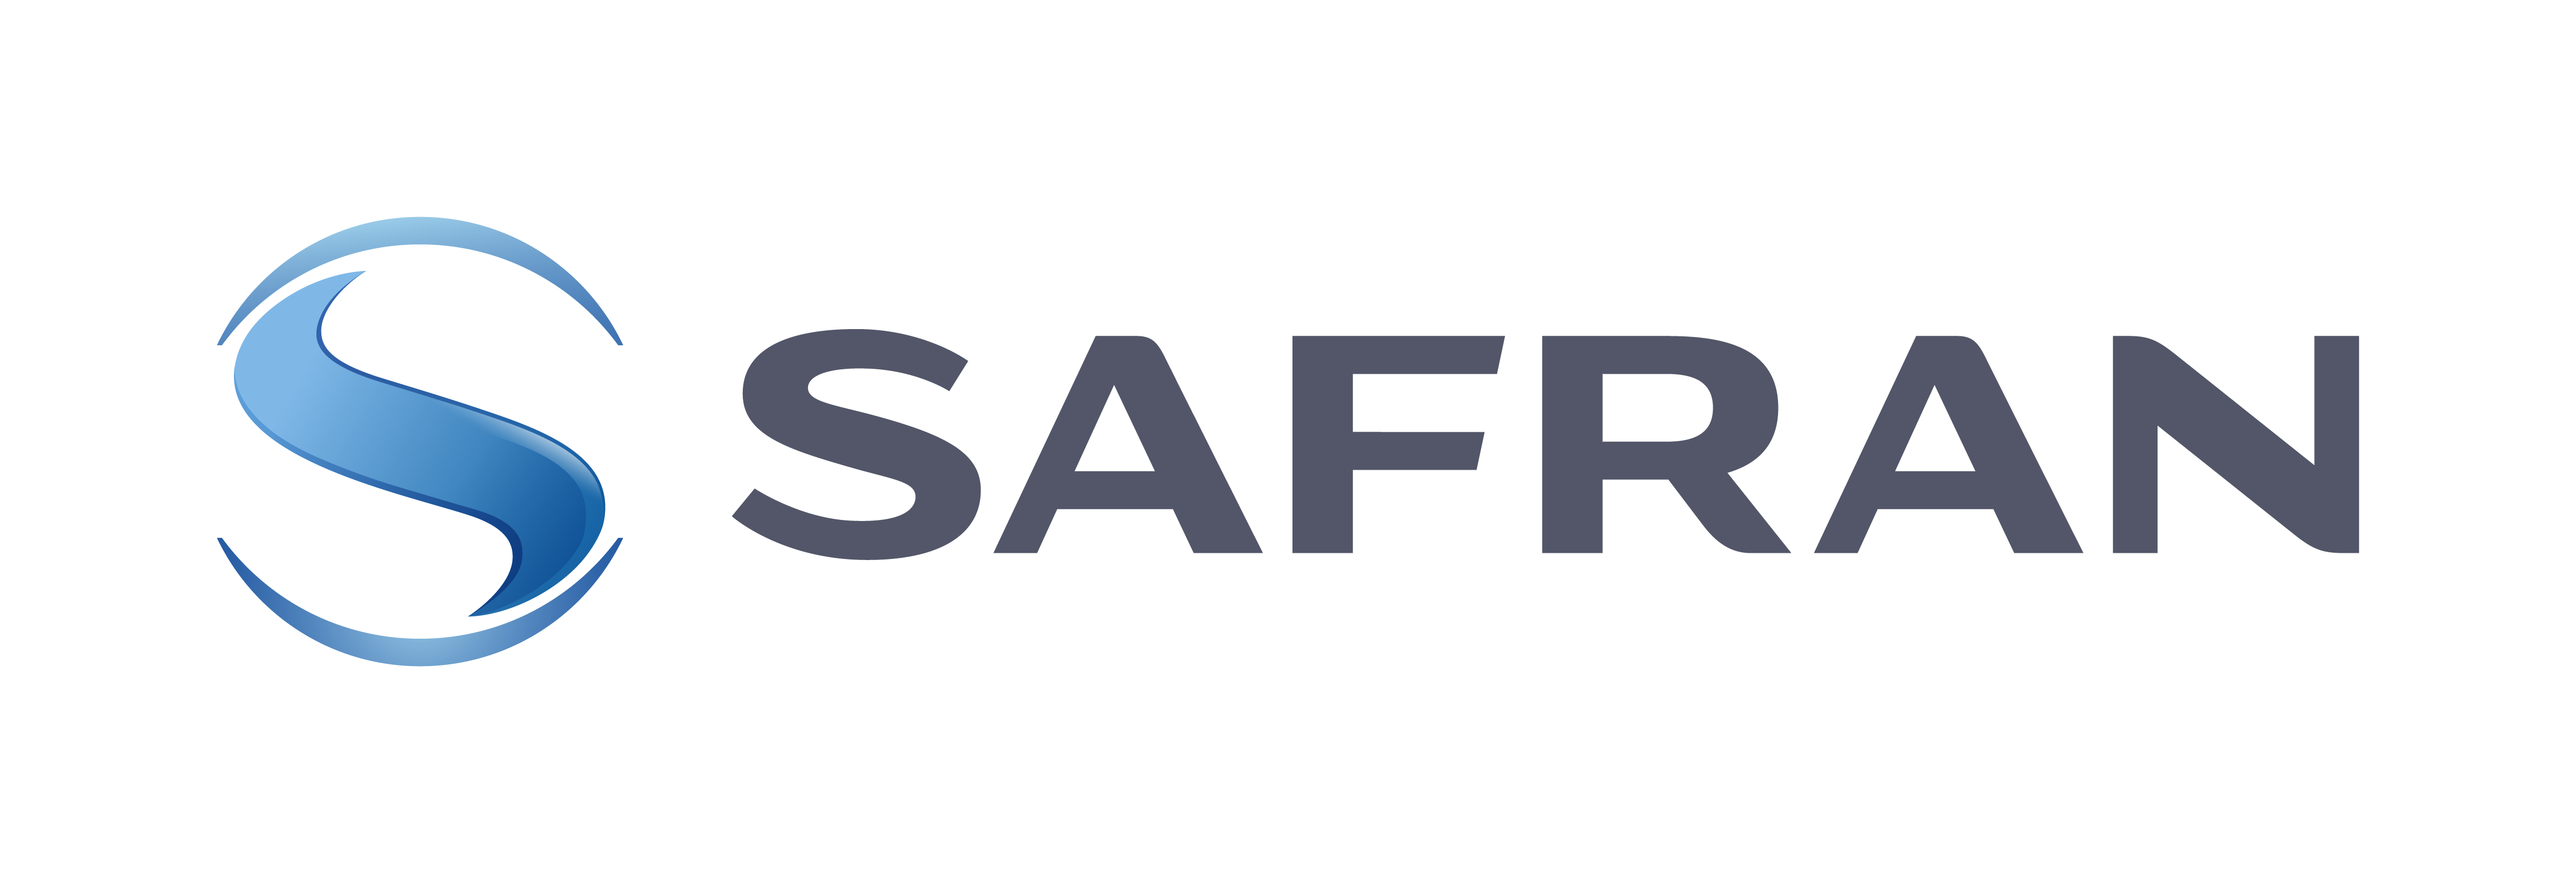 SAFRAN - SAFRAN Electronics and Defense